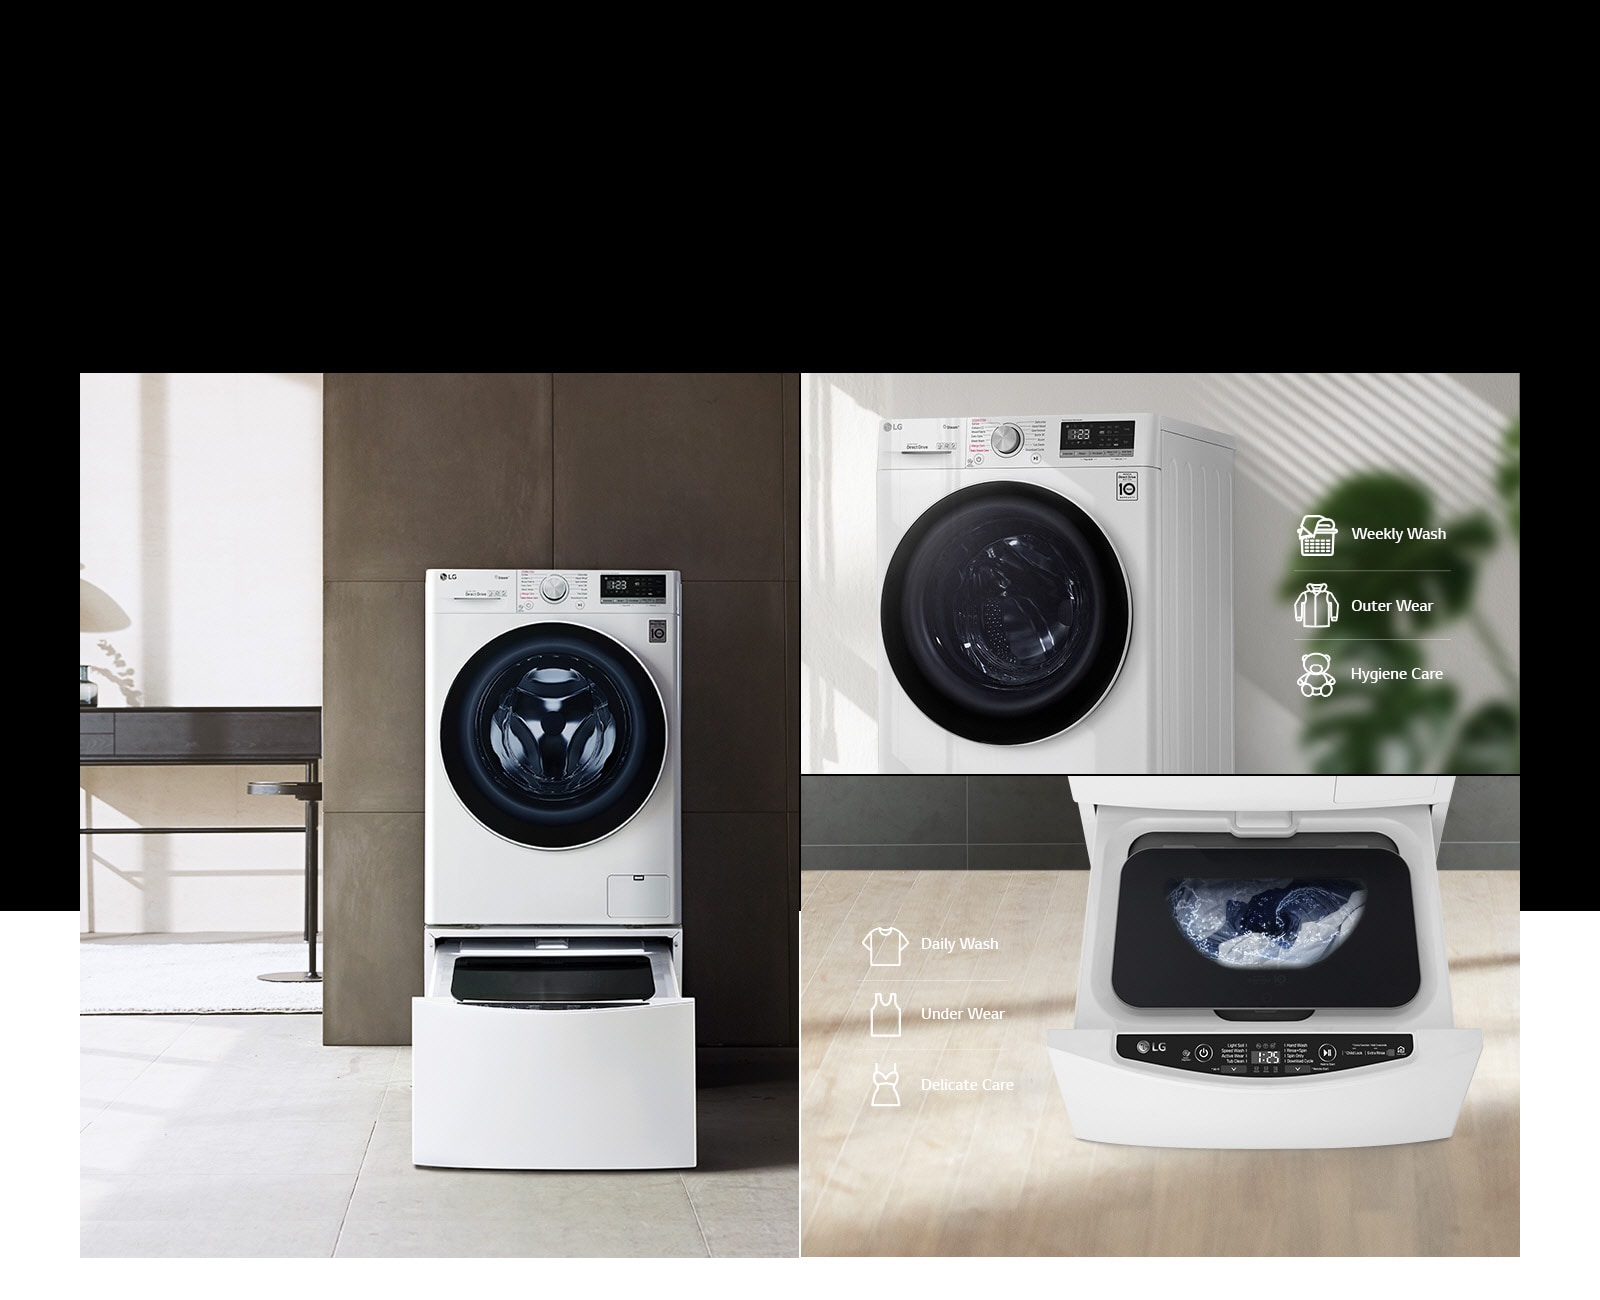 Advanced Washing LG Care F4V5VYP2T Laundry Machine: